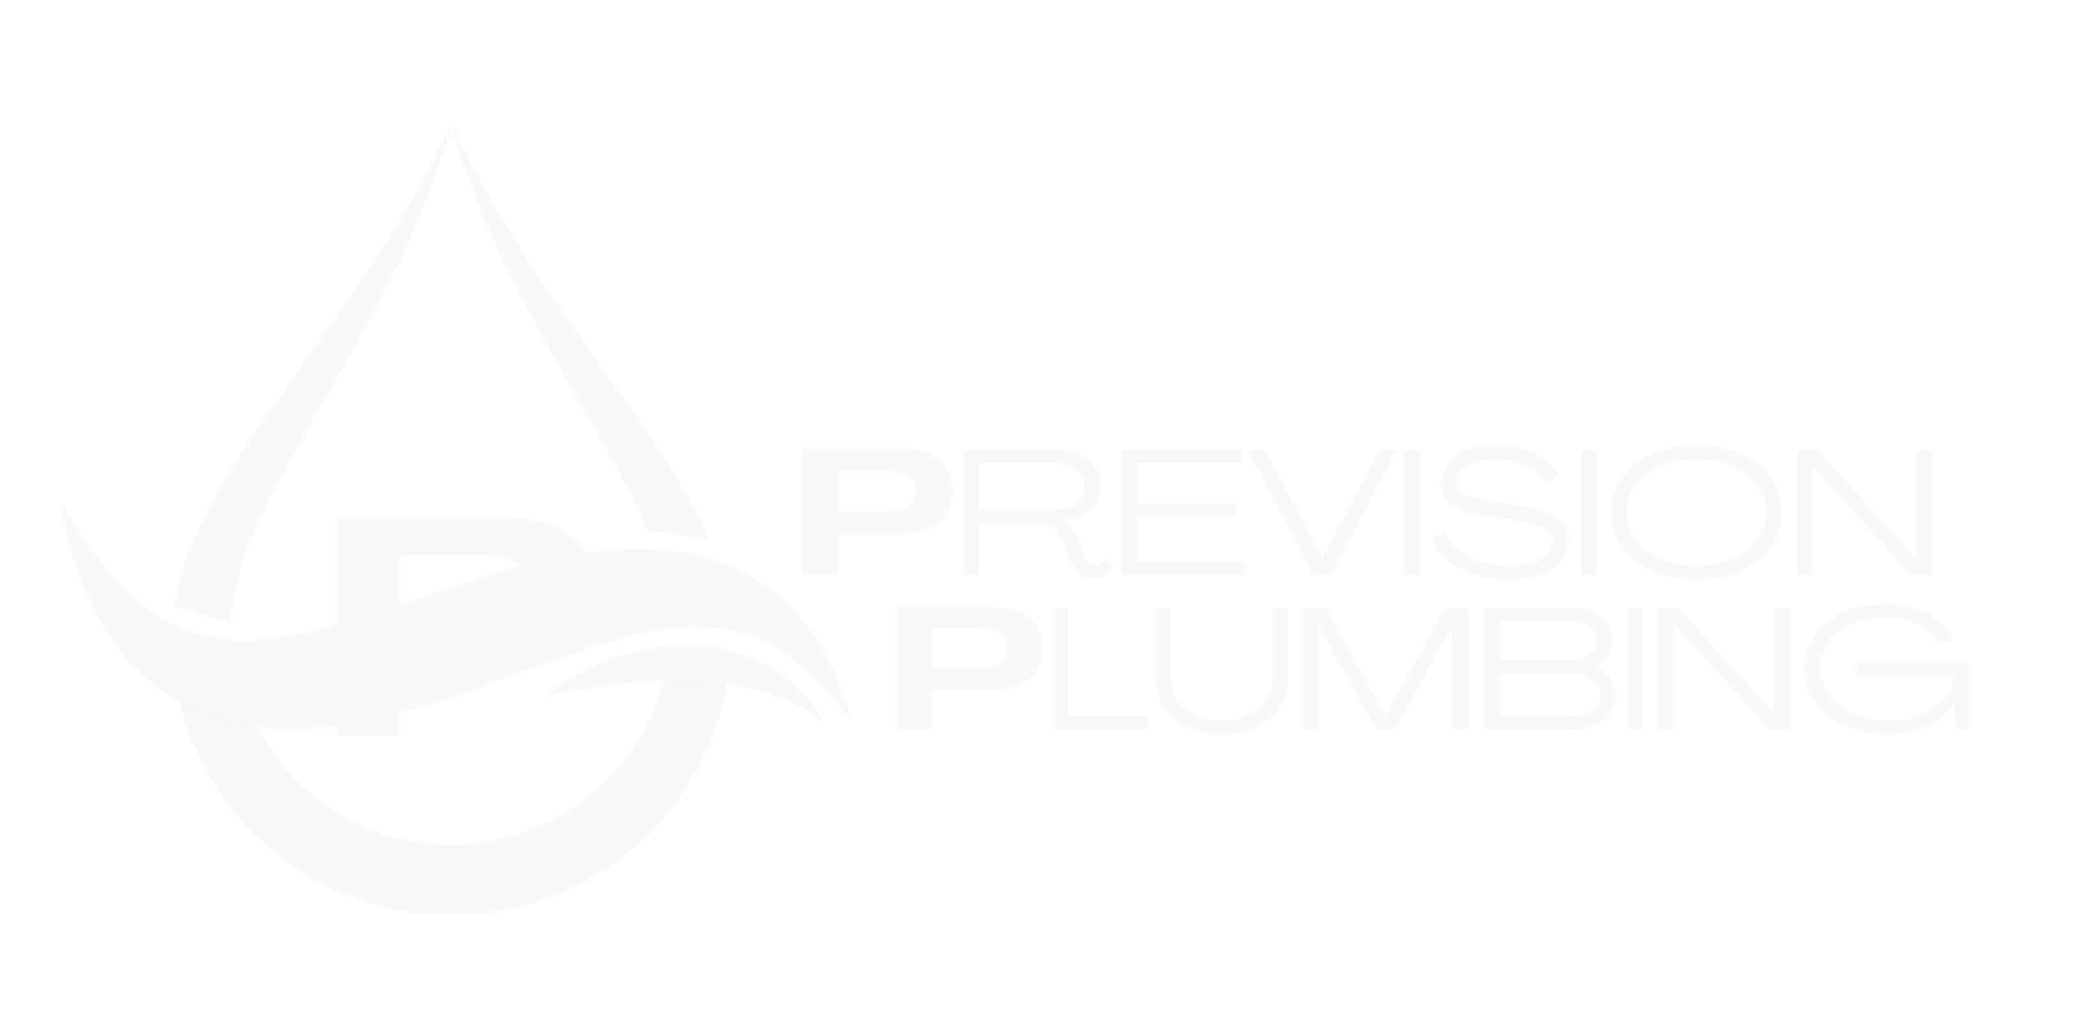 prevision logo footer